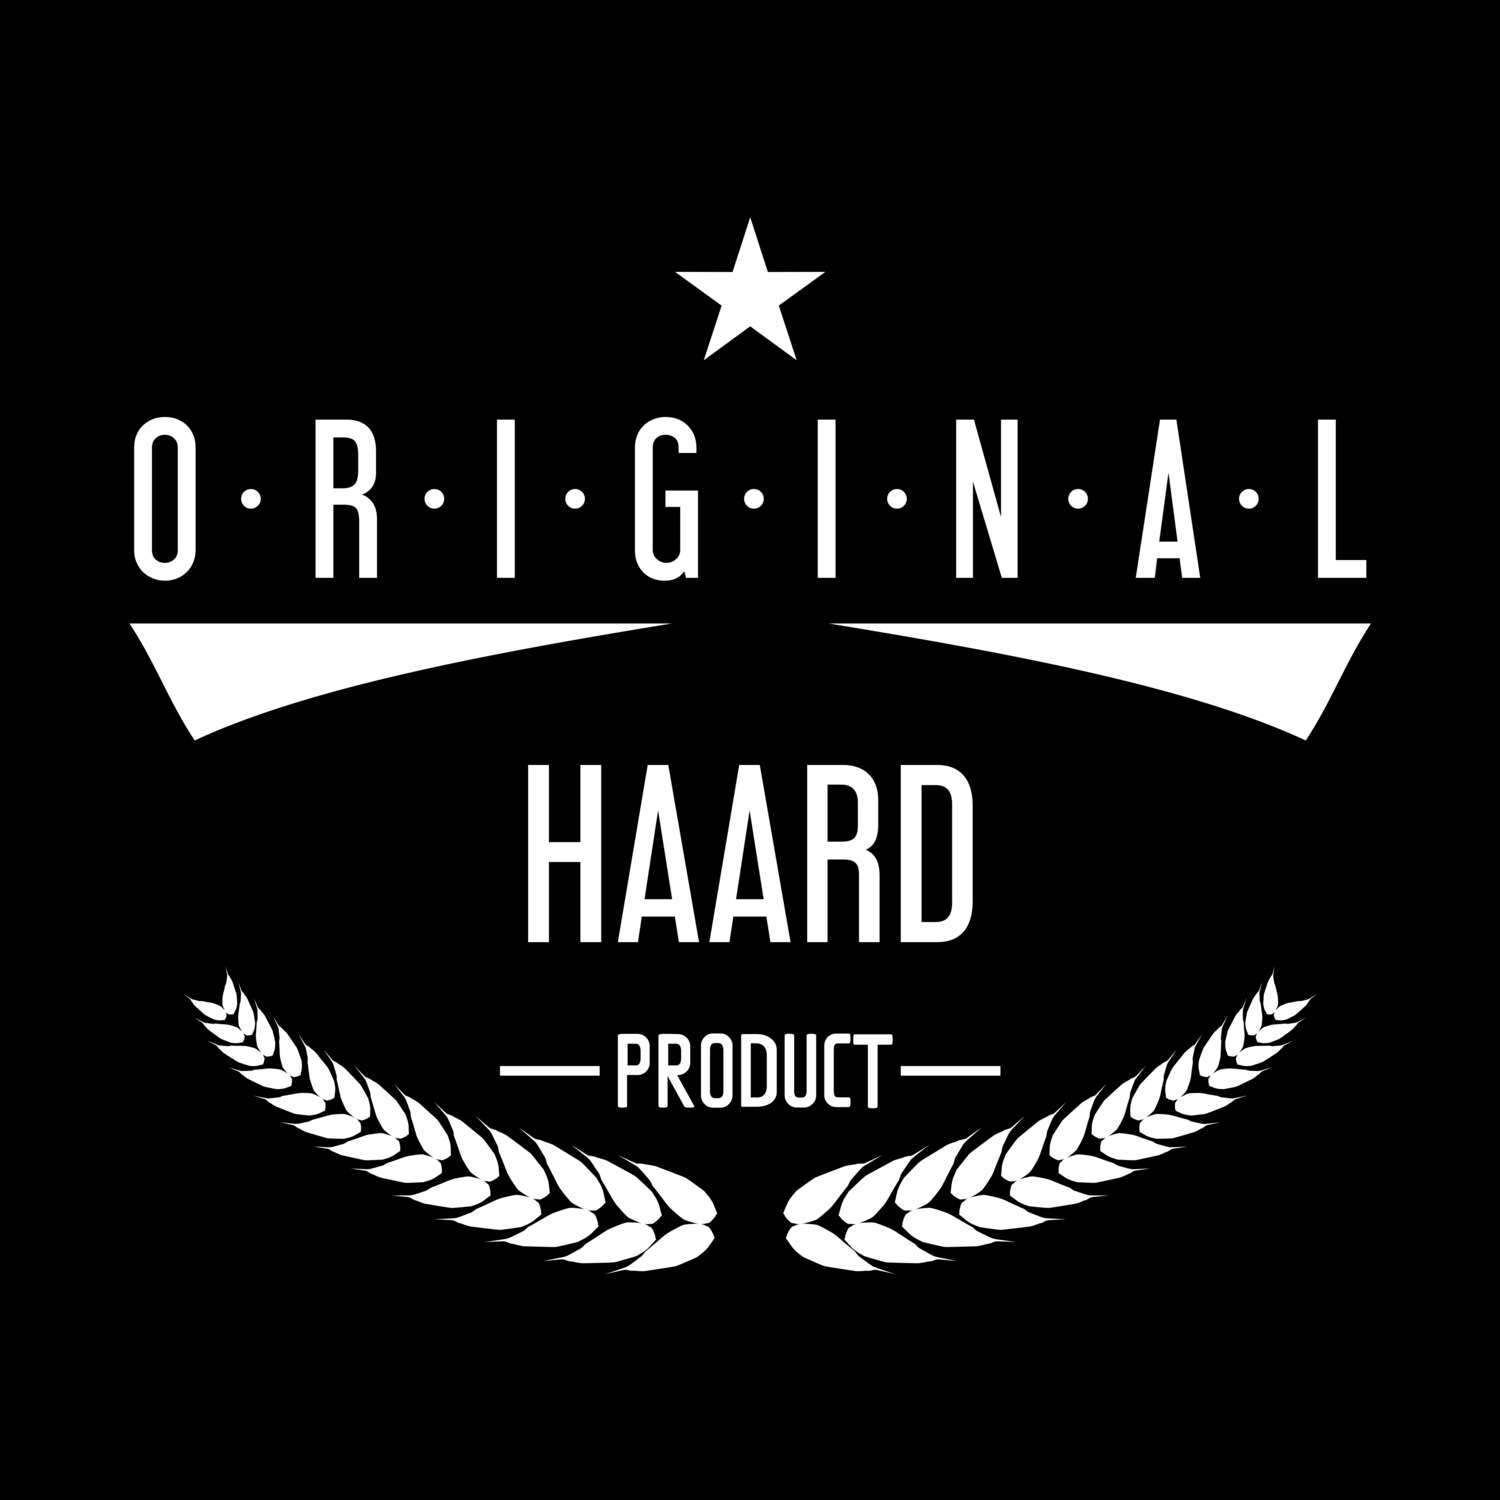 Haard T-Shirt »Original Product«